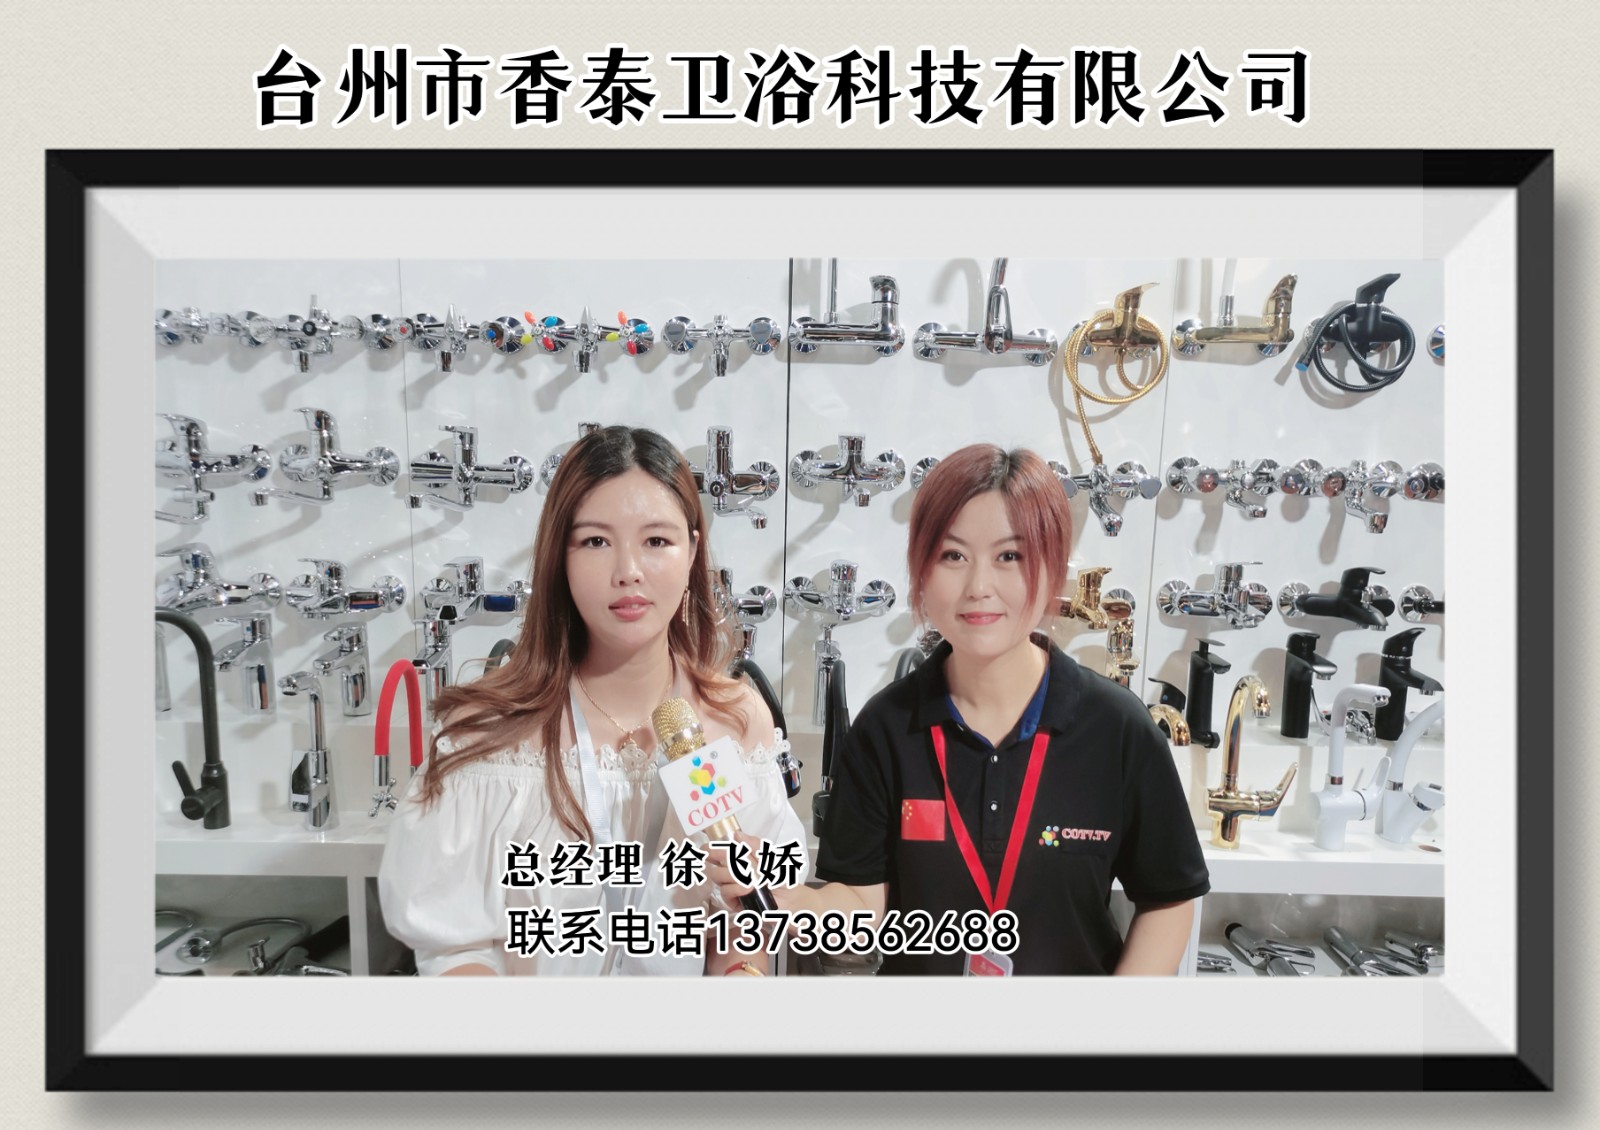 COTV直播-台州市香泰卫浴科技有限公司生产销售水龙头、淋浴器及洁具等产品，欢迎大家光临！